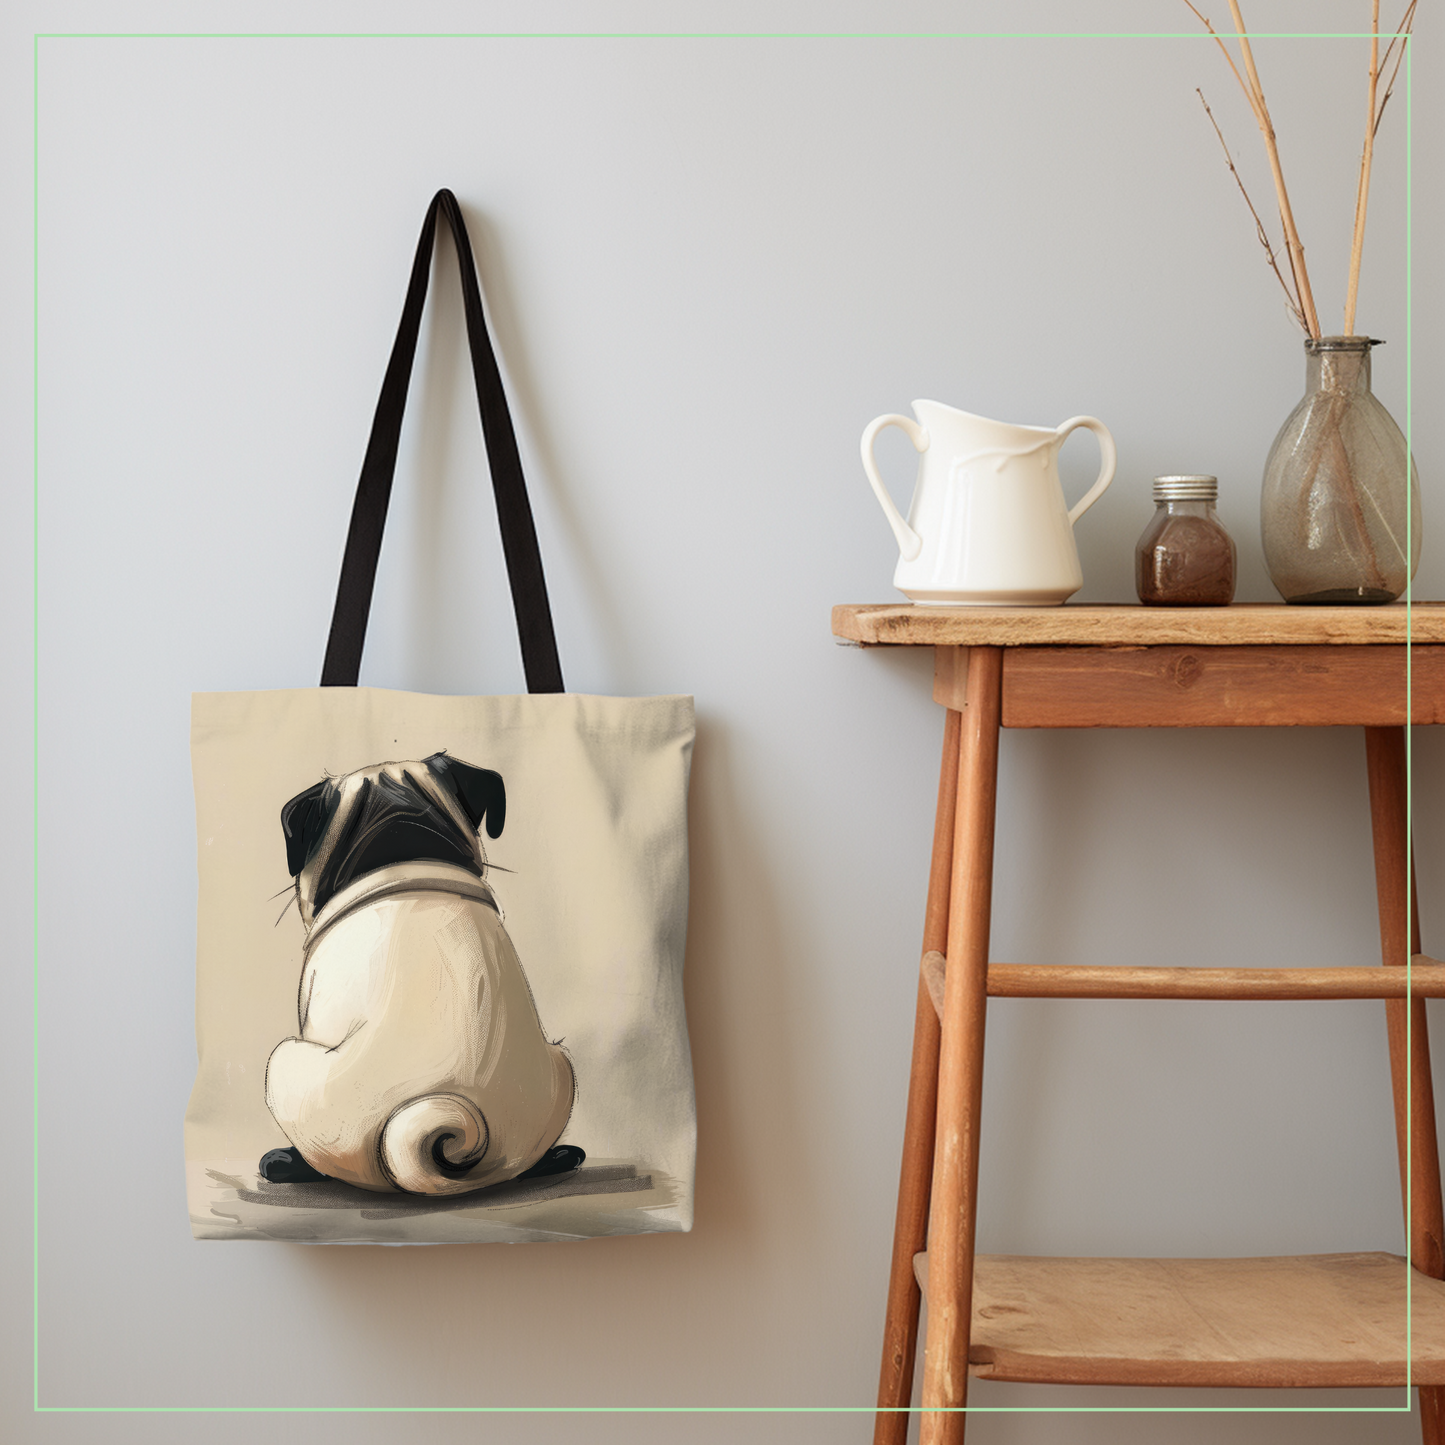 The Cold Shoulder - Pug Tote Bag Collection